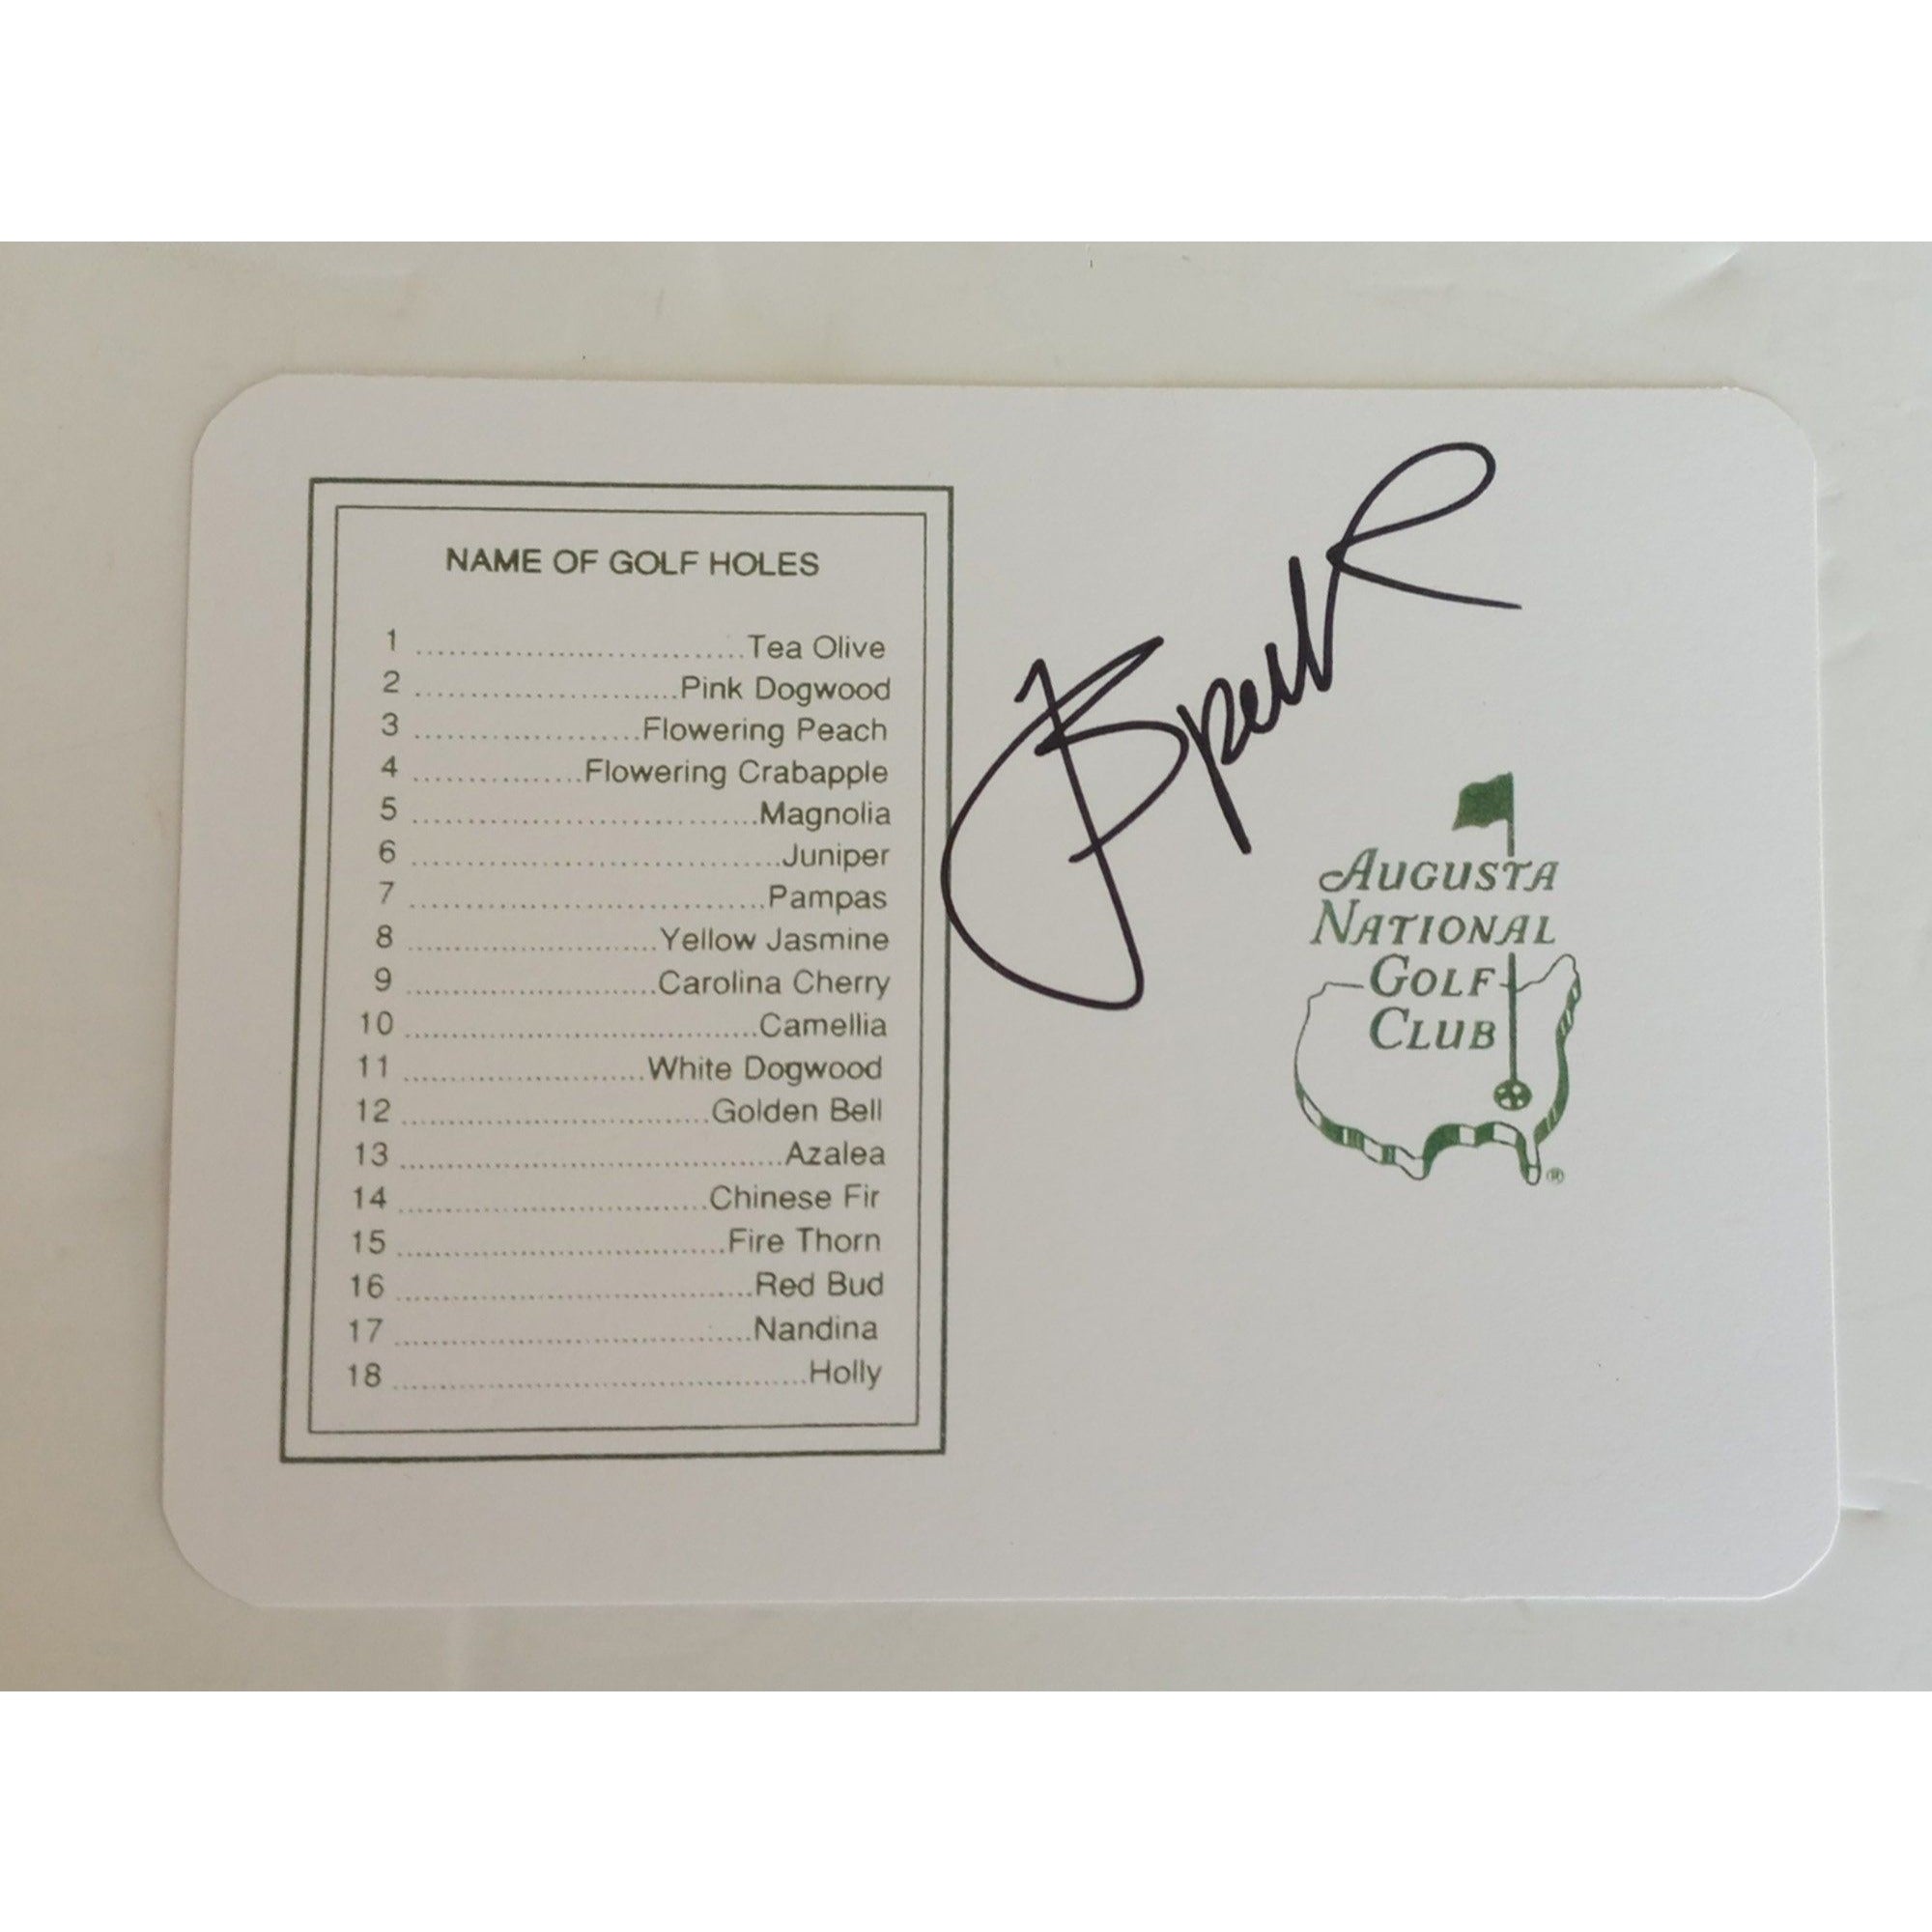 Jordan Spieth Masters Golf scorecard signed with proof